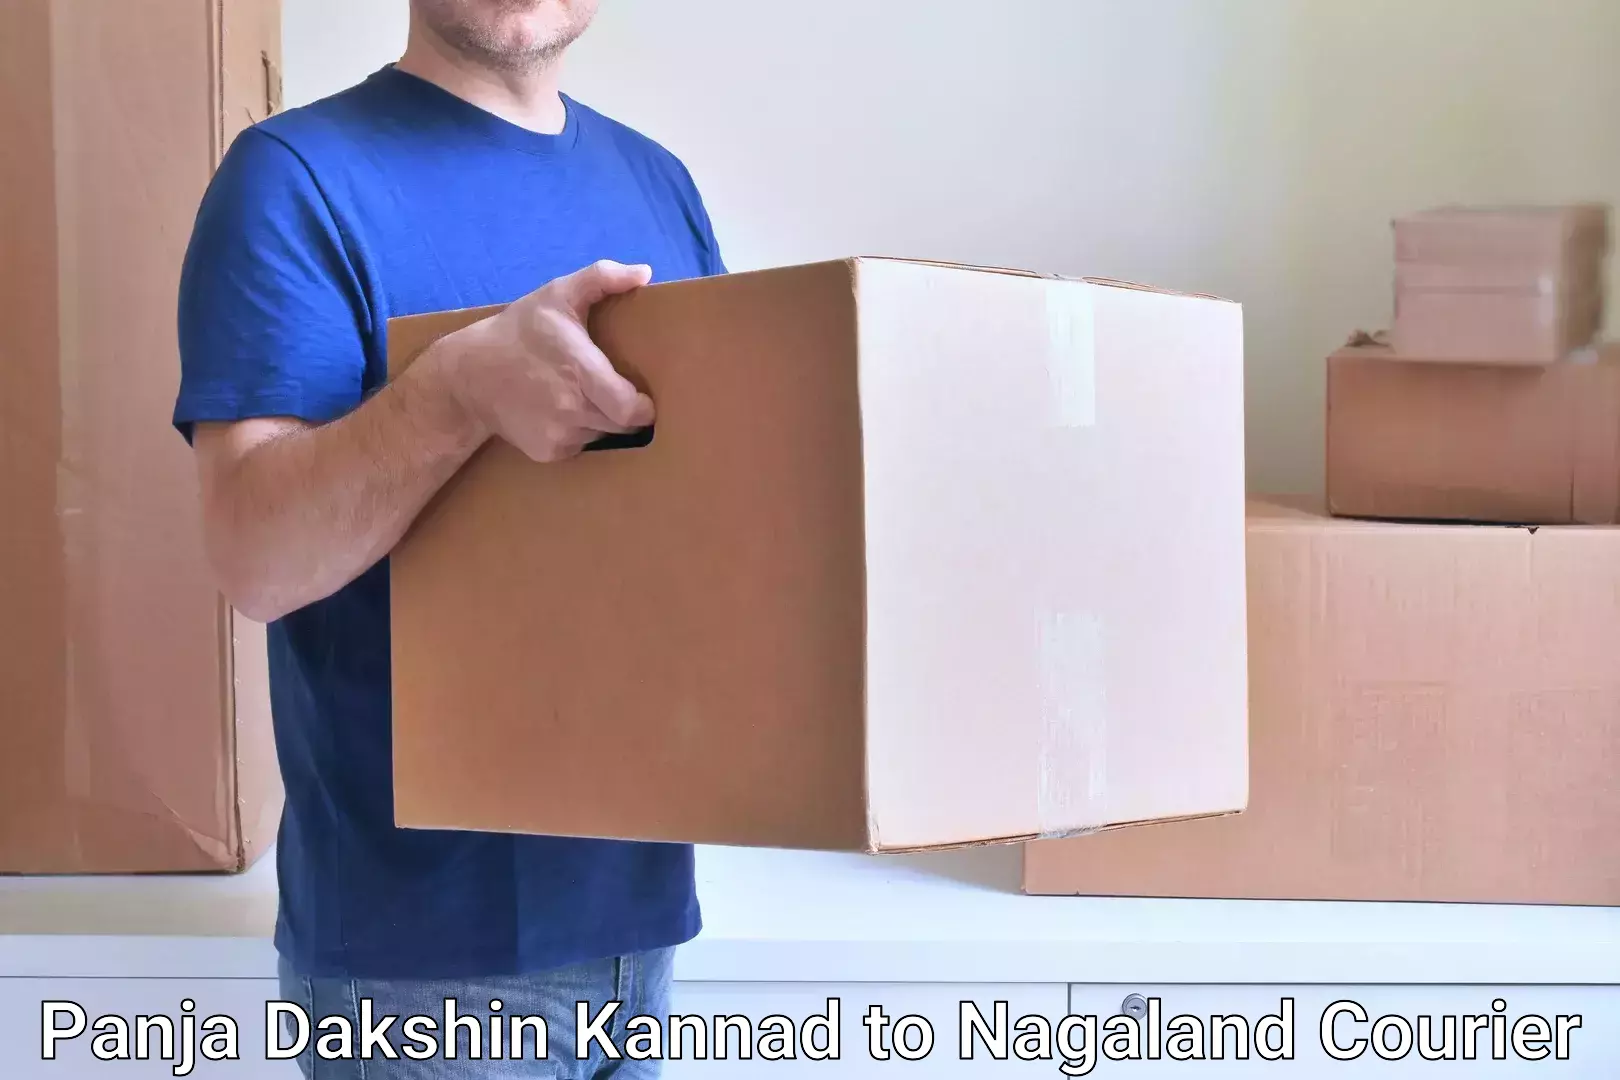 Custom courier packaging in Panja Dakshin Kannad to Nagaland